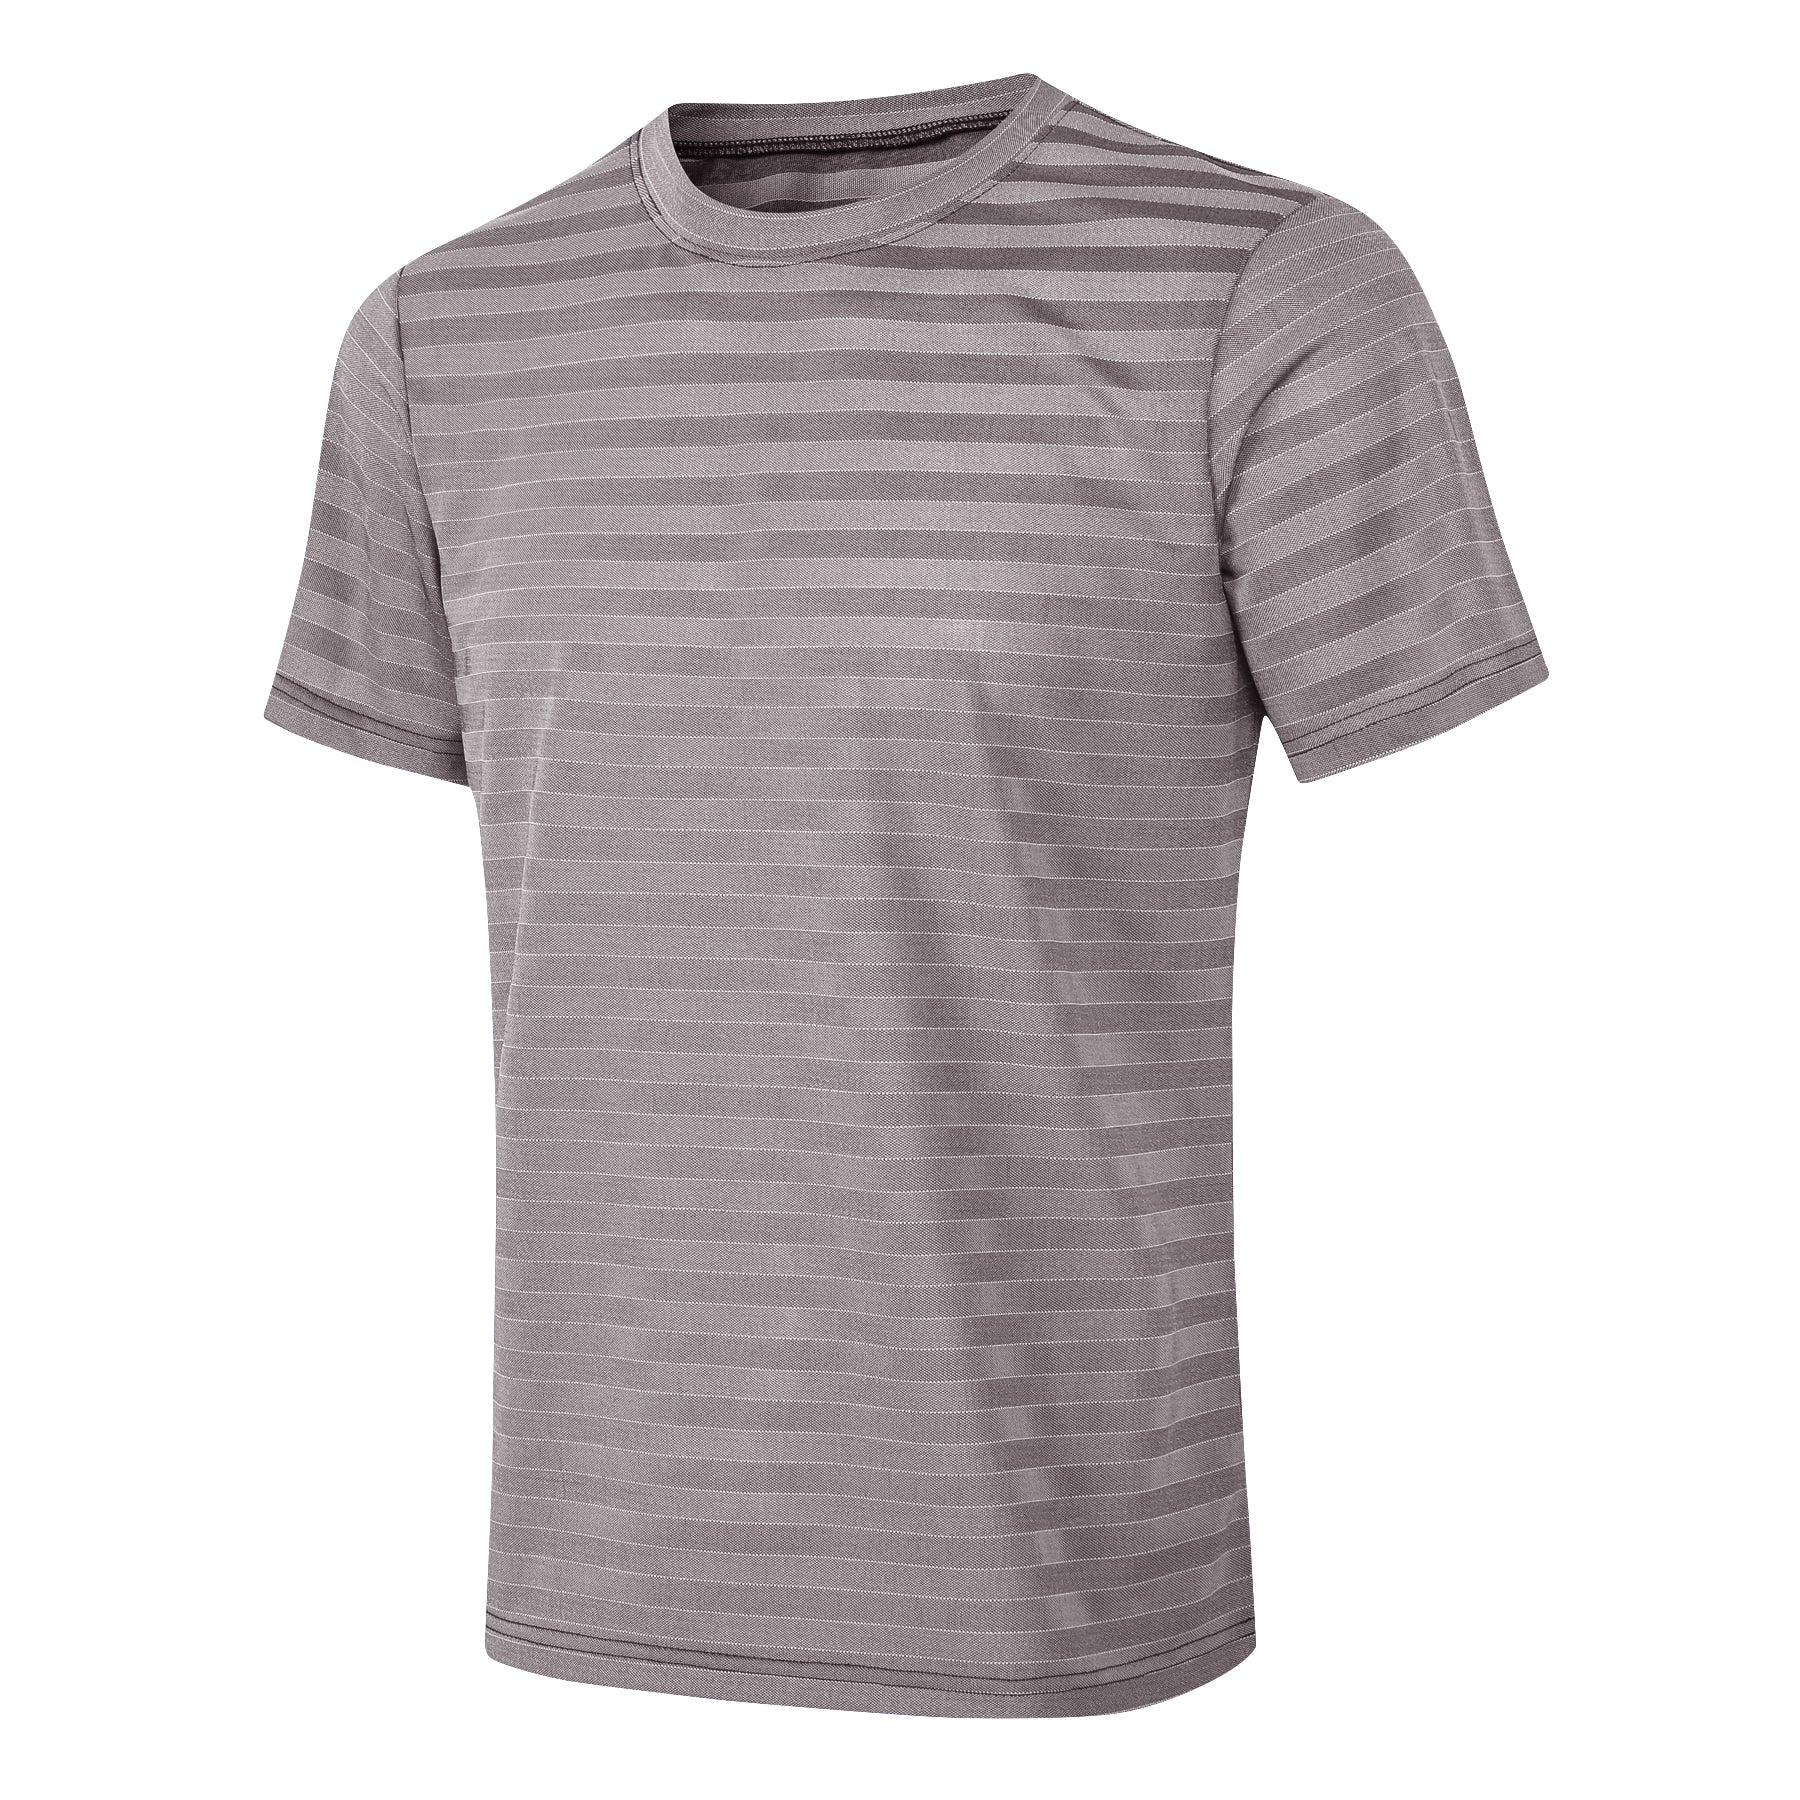 Mens Quick Dry T-shirts Moisture Wicking Stretch Short Sleeve Shirt Crew Neck Stripe Performance Workout Athletic Shirts LANBAOSI